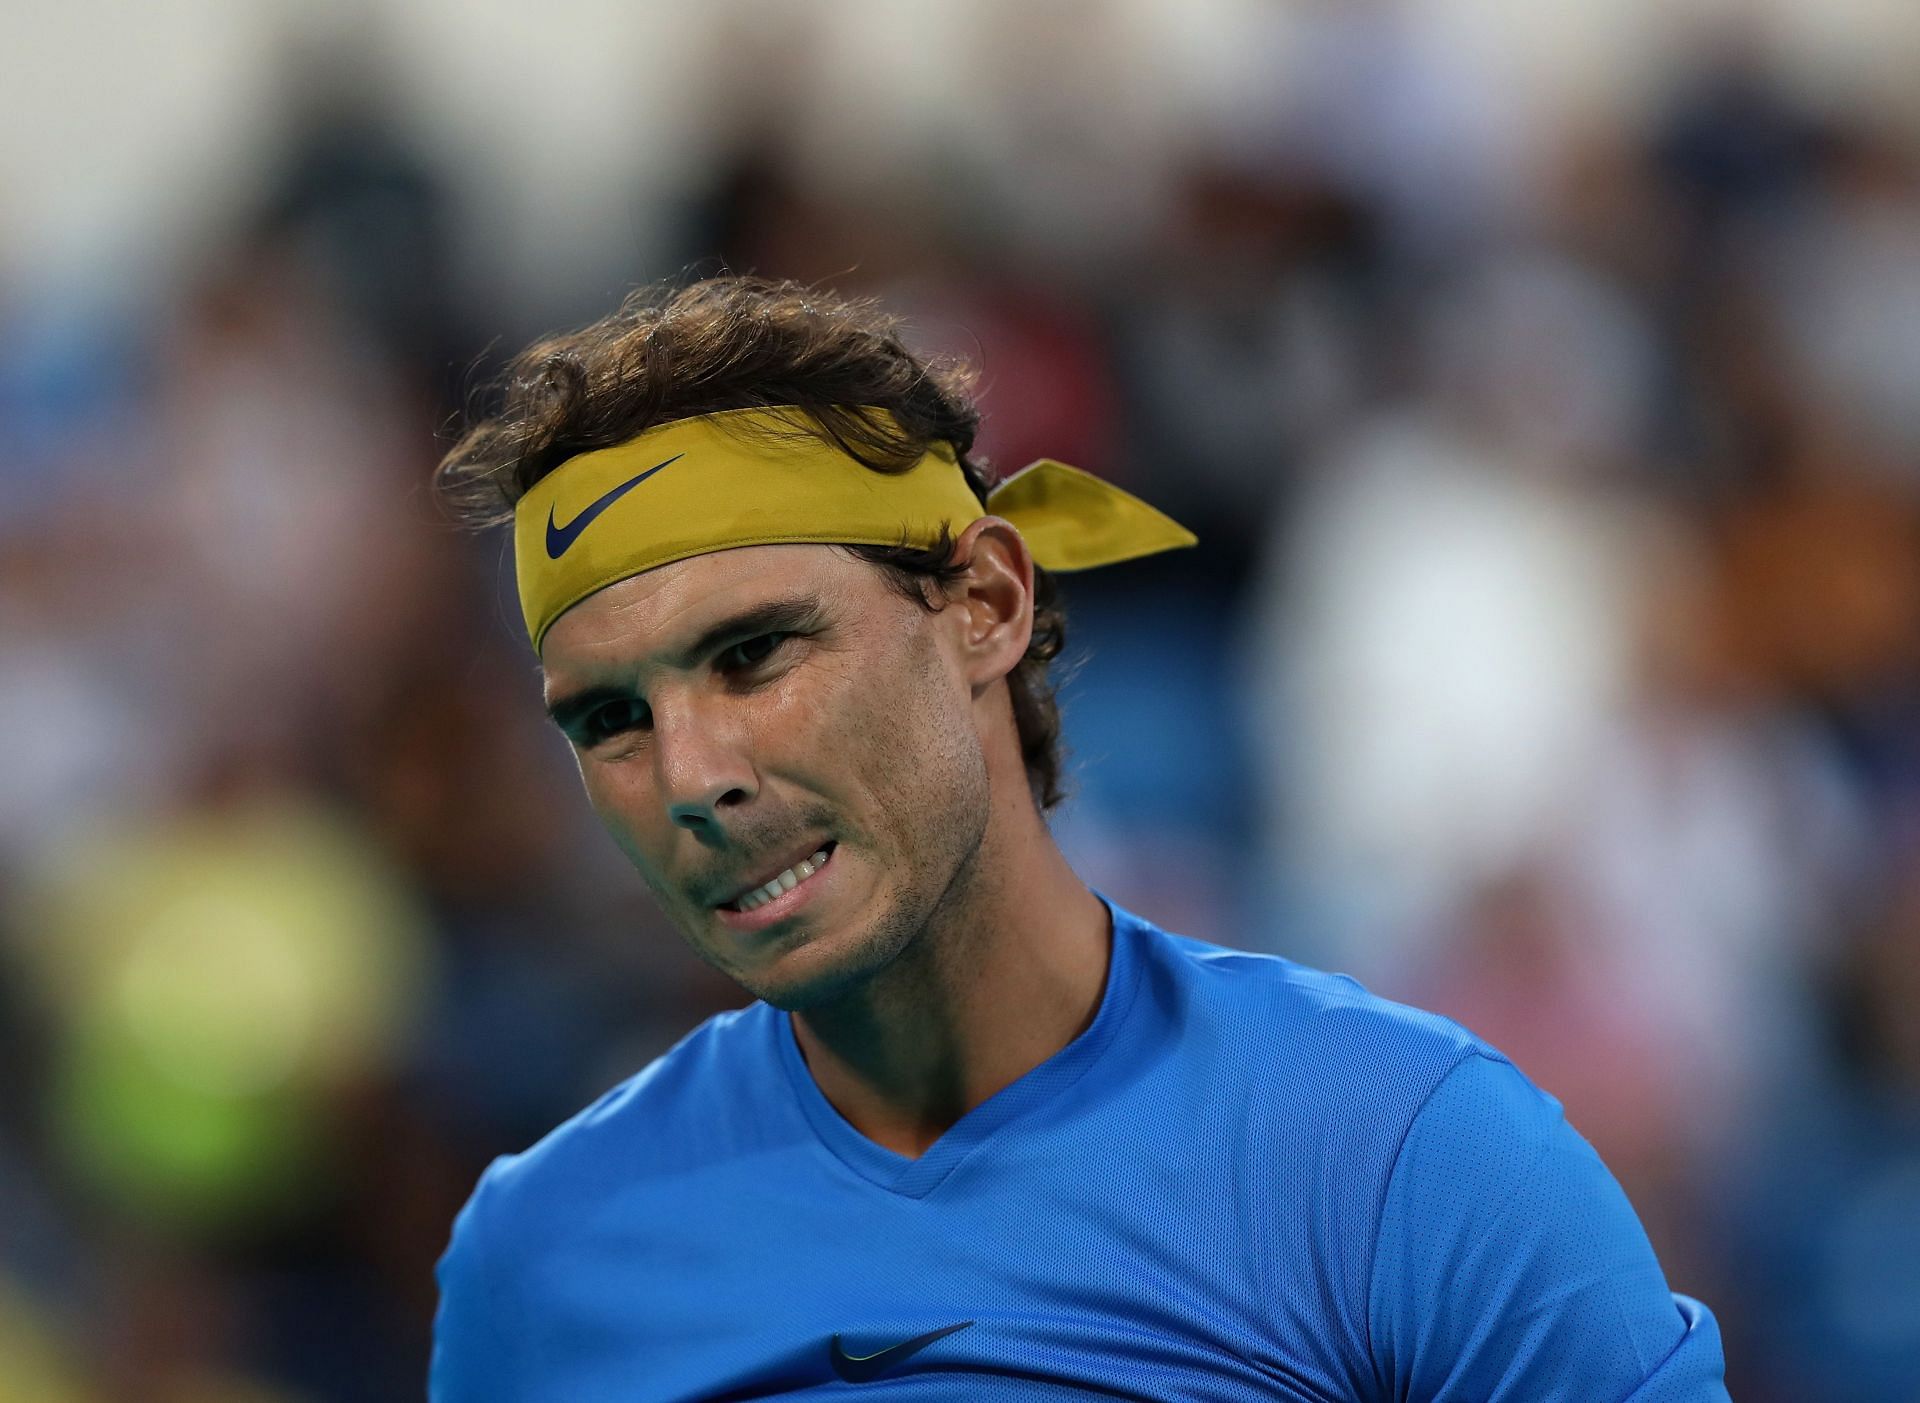 Rafael Nadal will be defemding his crown at the 2021 Mubadala World Tennis Championship